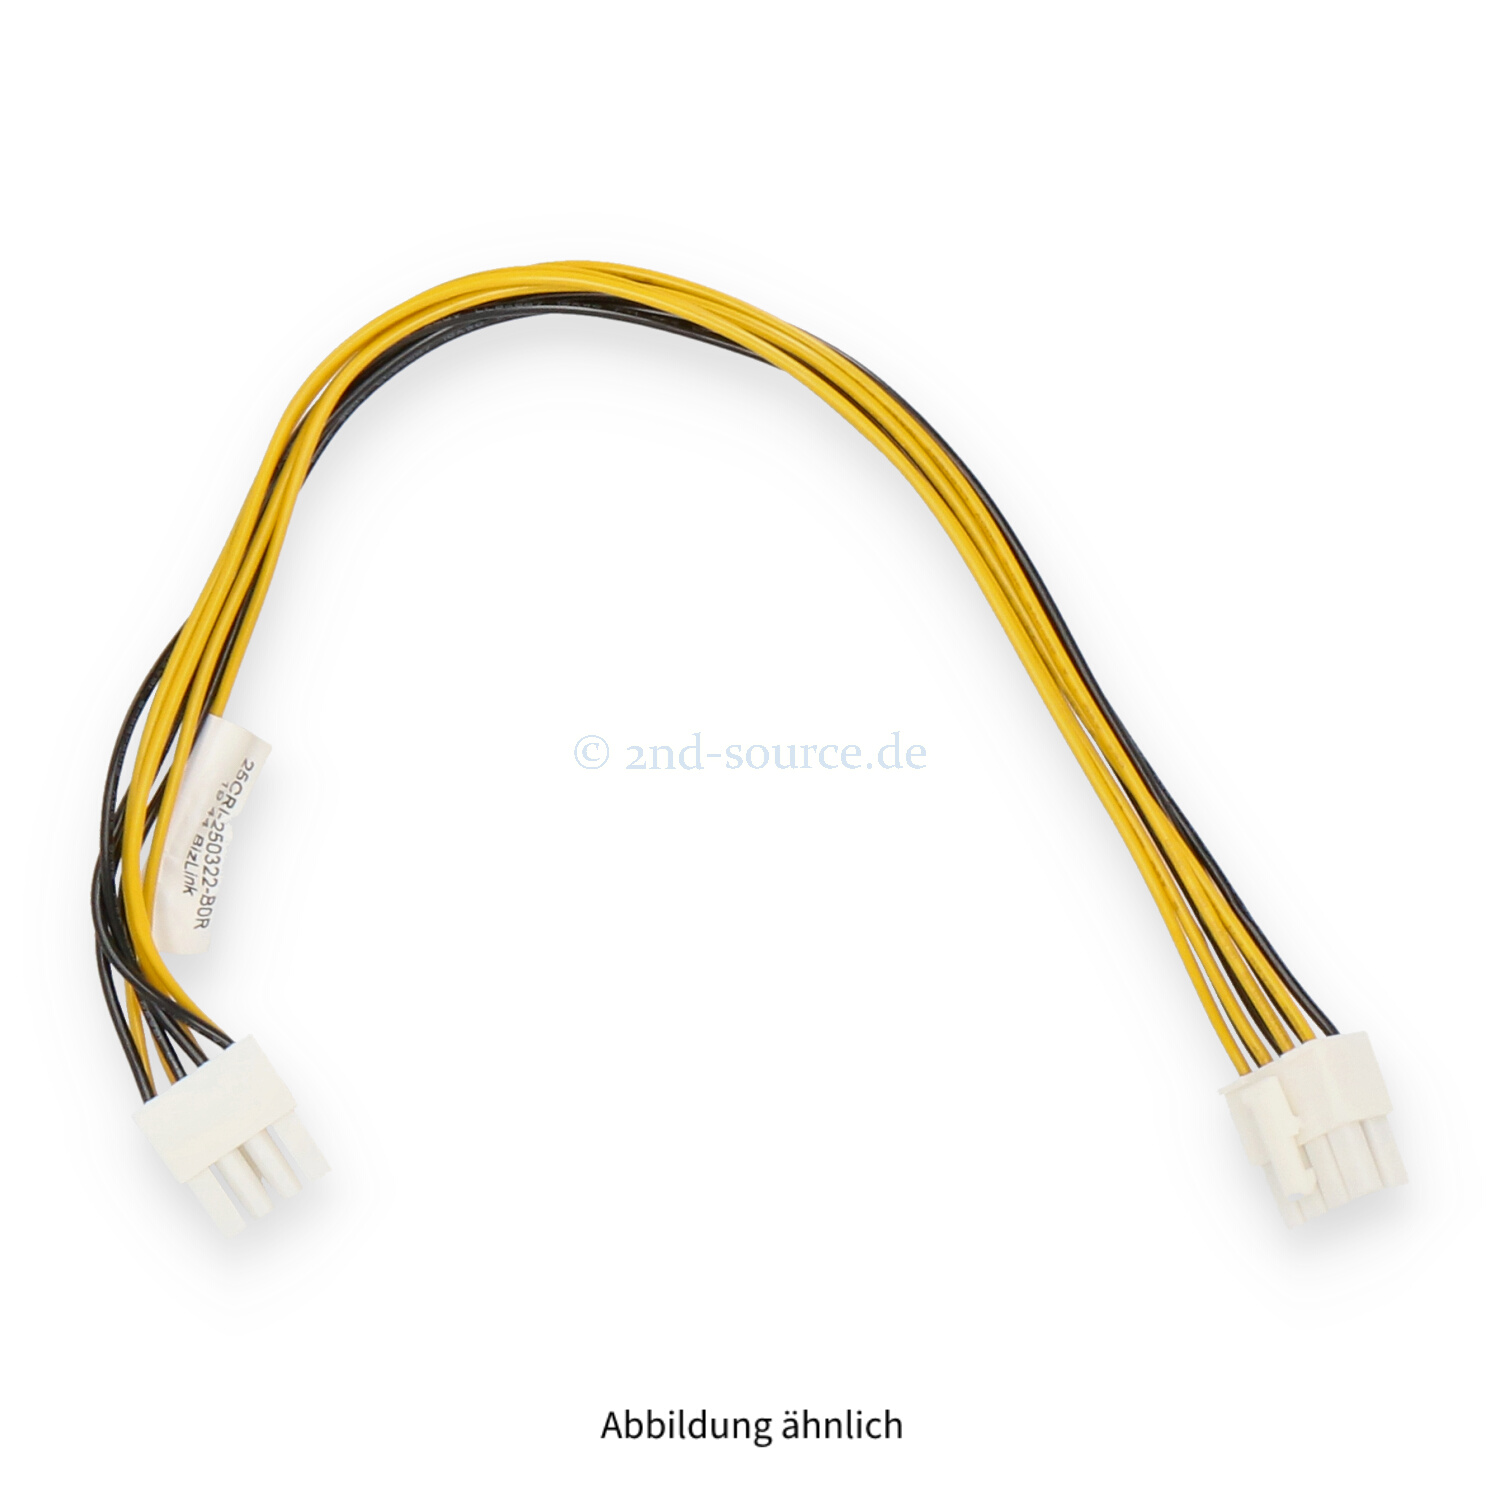 Gigabyte 0.30m 8-pin to 8-pin GPU Cable G291-281 25CRI-250322-B0R